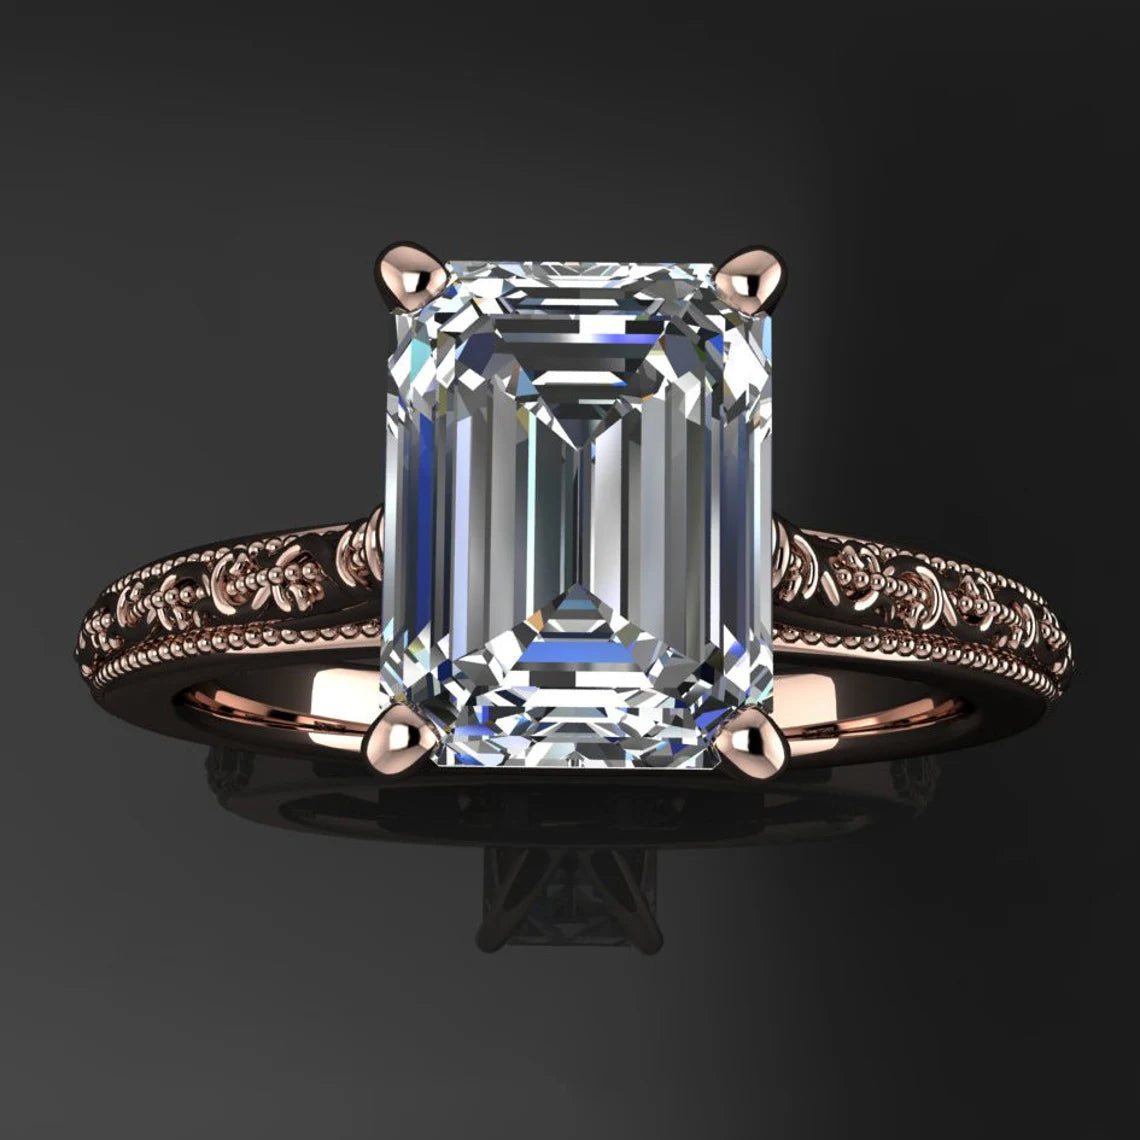 perla ring - 2 carat emerald cut NEO moissanite engagement ring - J Hollywood Designs